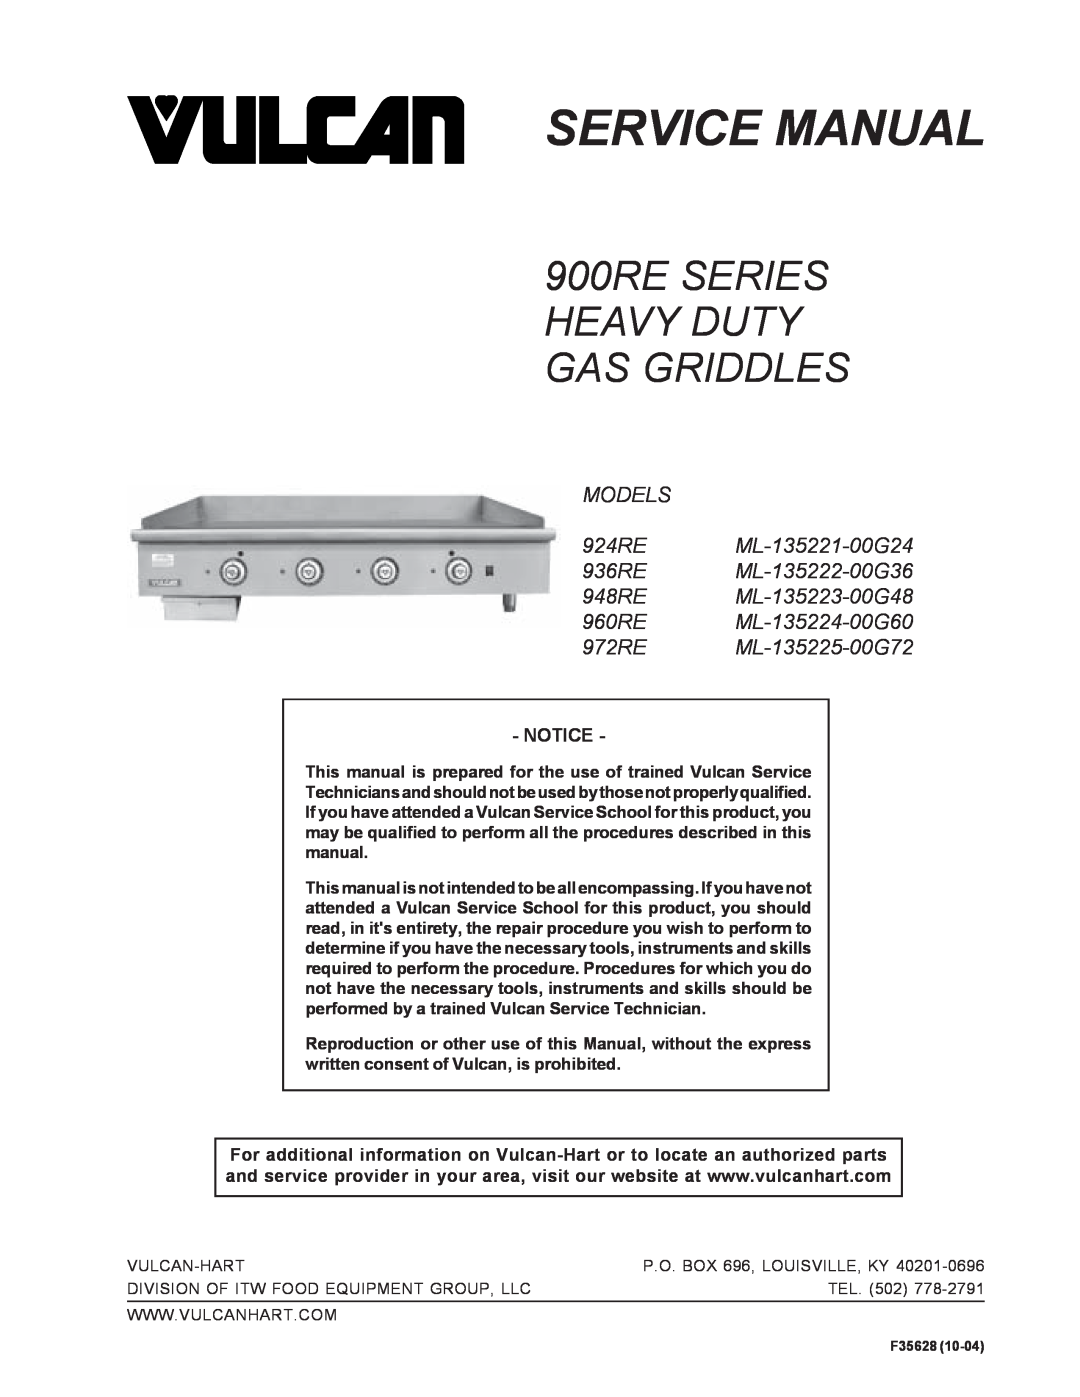 Vulcan-Hart service manual 900RE SERIES HEAVY DUTY GAS GRIDDLES, MODELS 924RE ML-135221-00G24 